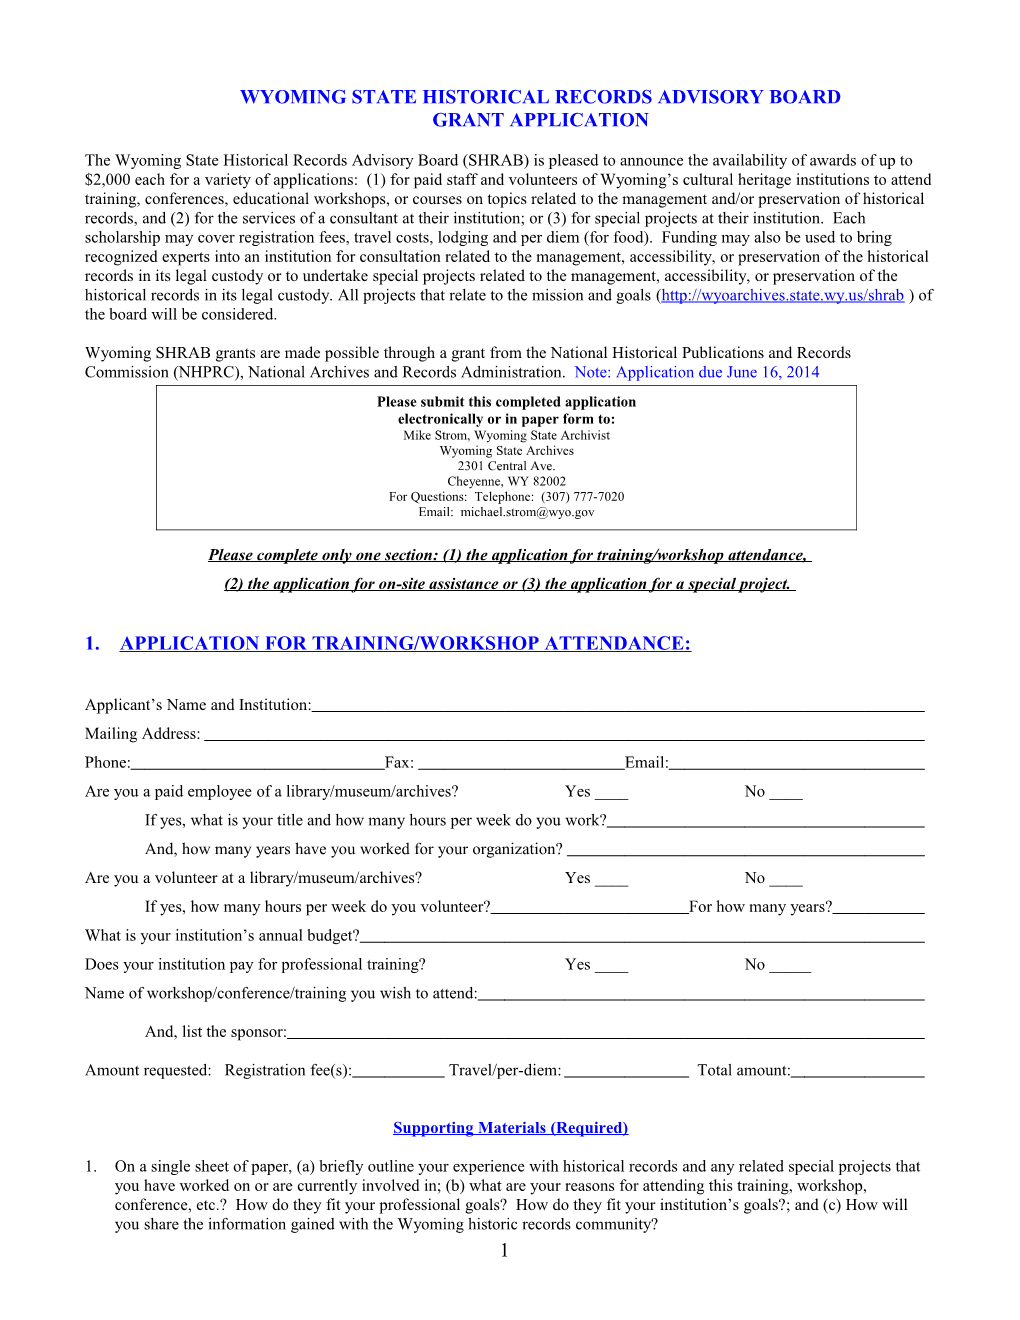 2004 Montana Shrab Professional Development Scholarship